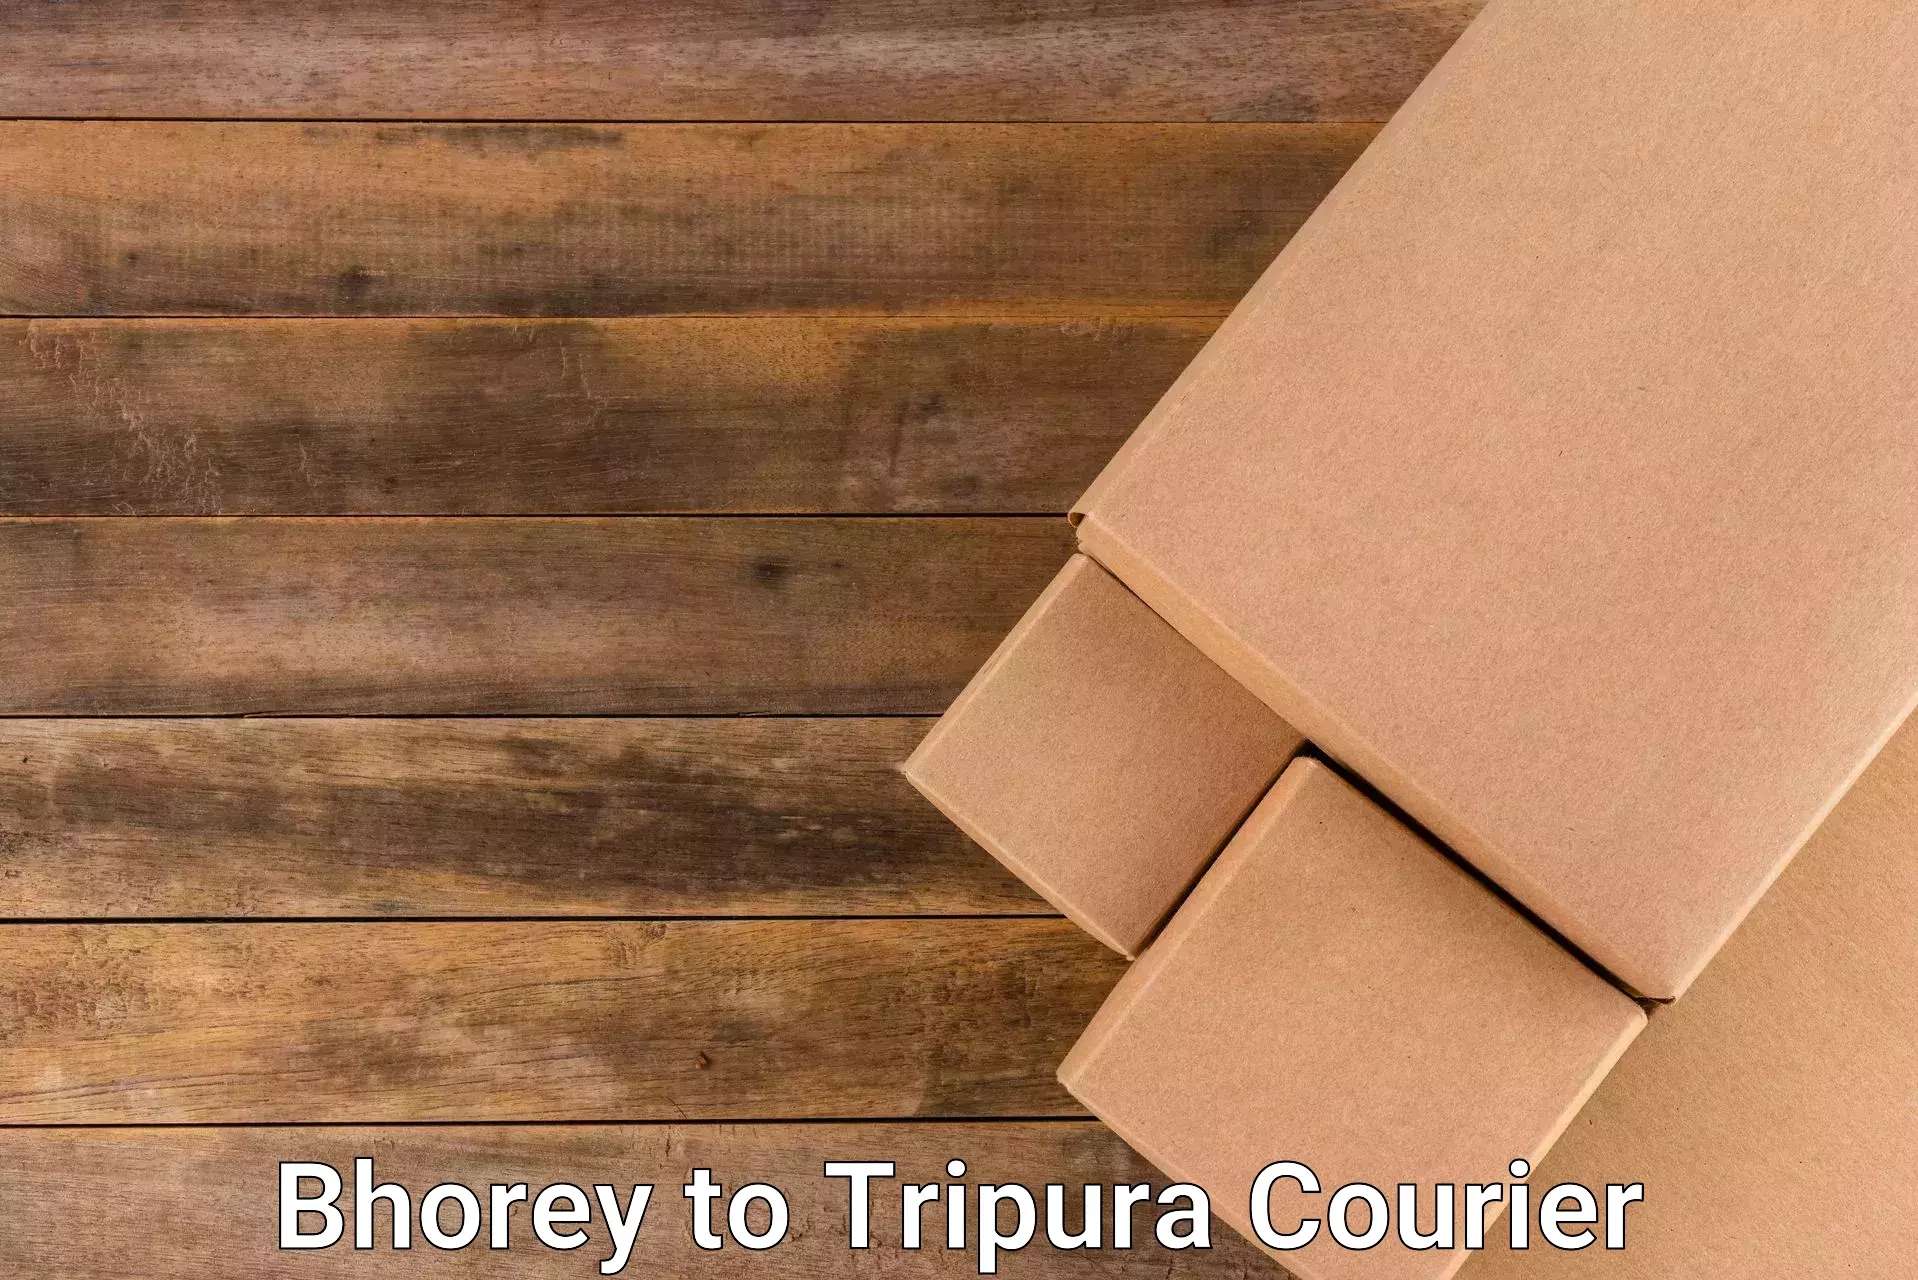 Customer-centric shipping Bhorey to Udaipur Tripura